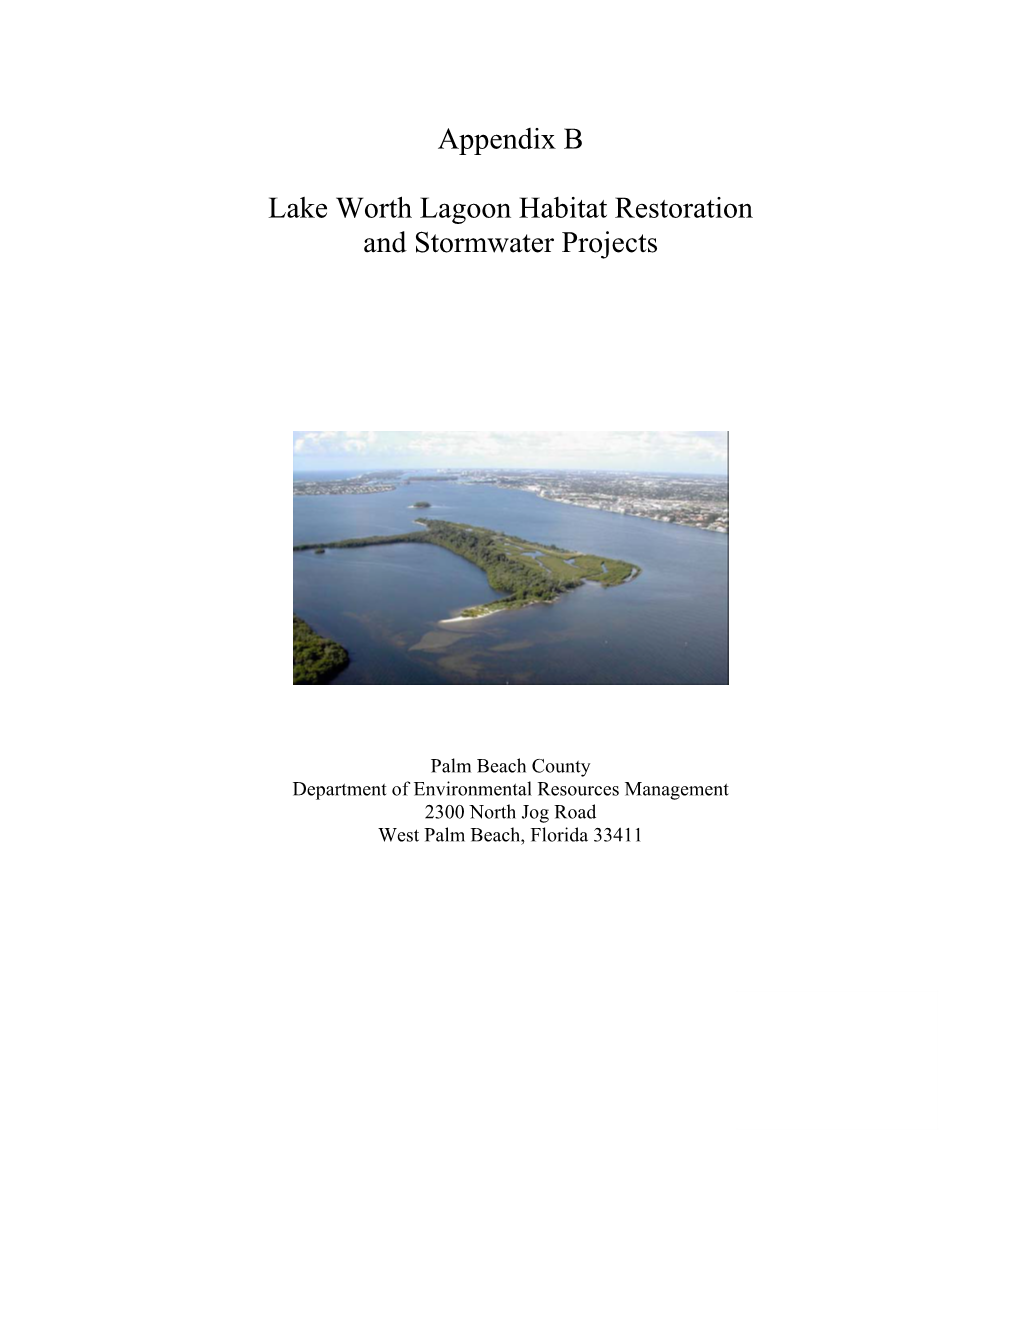 Appendix B Lake Worth Lagoon Habitat Restoration and Stormwater Projects